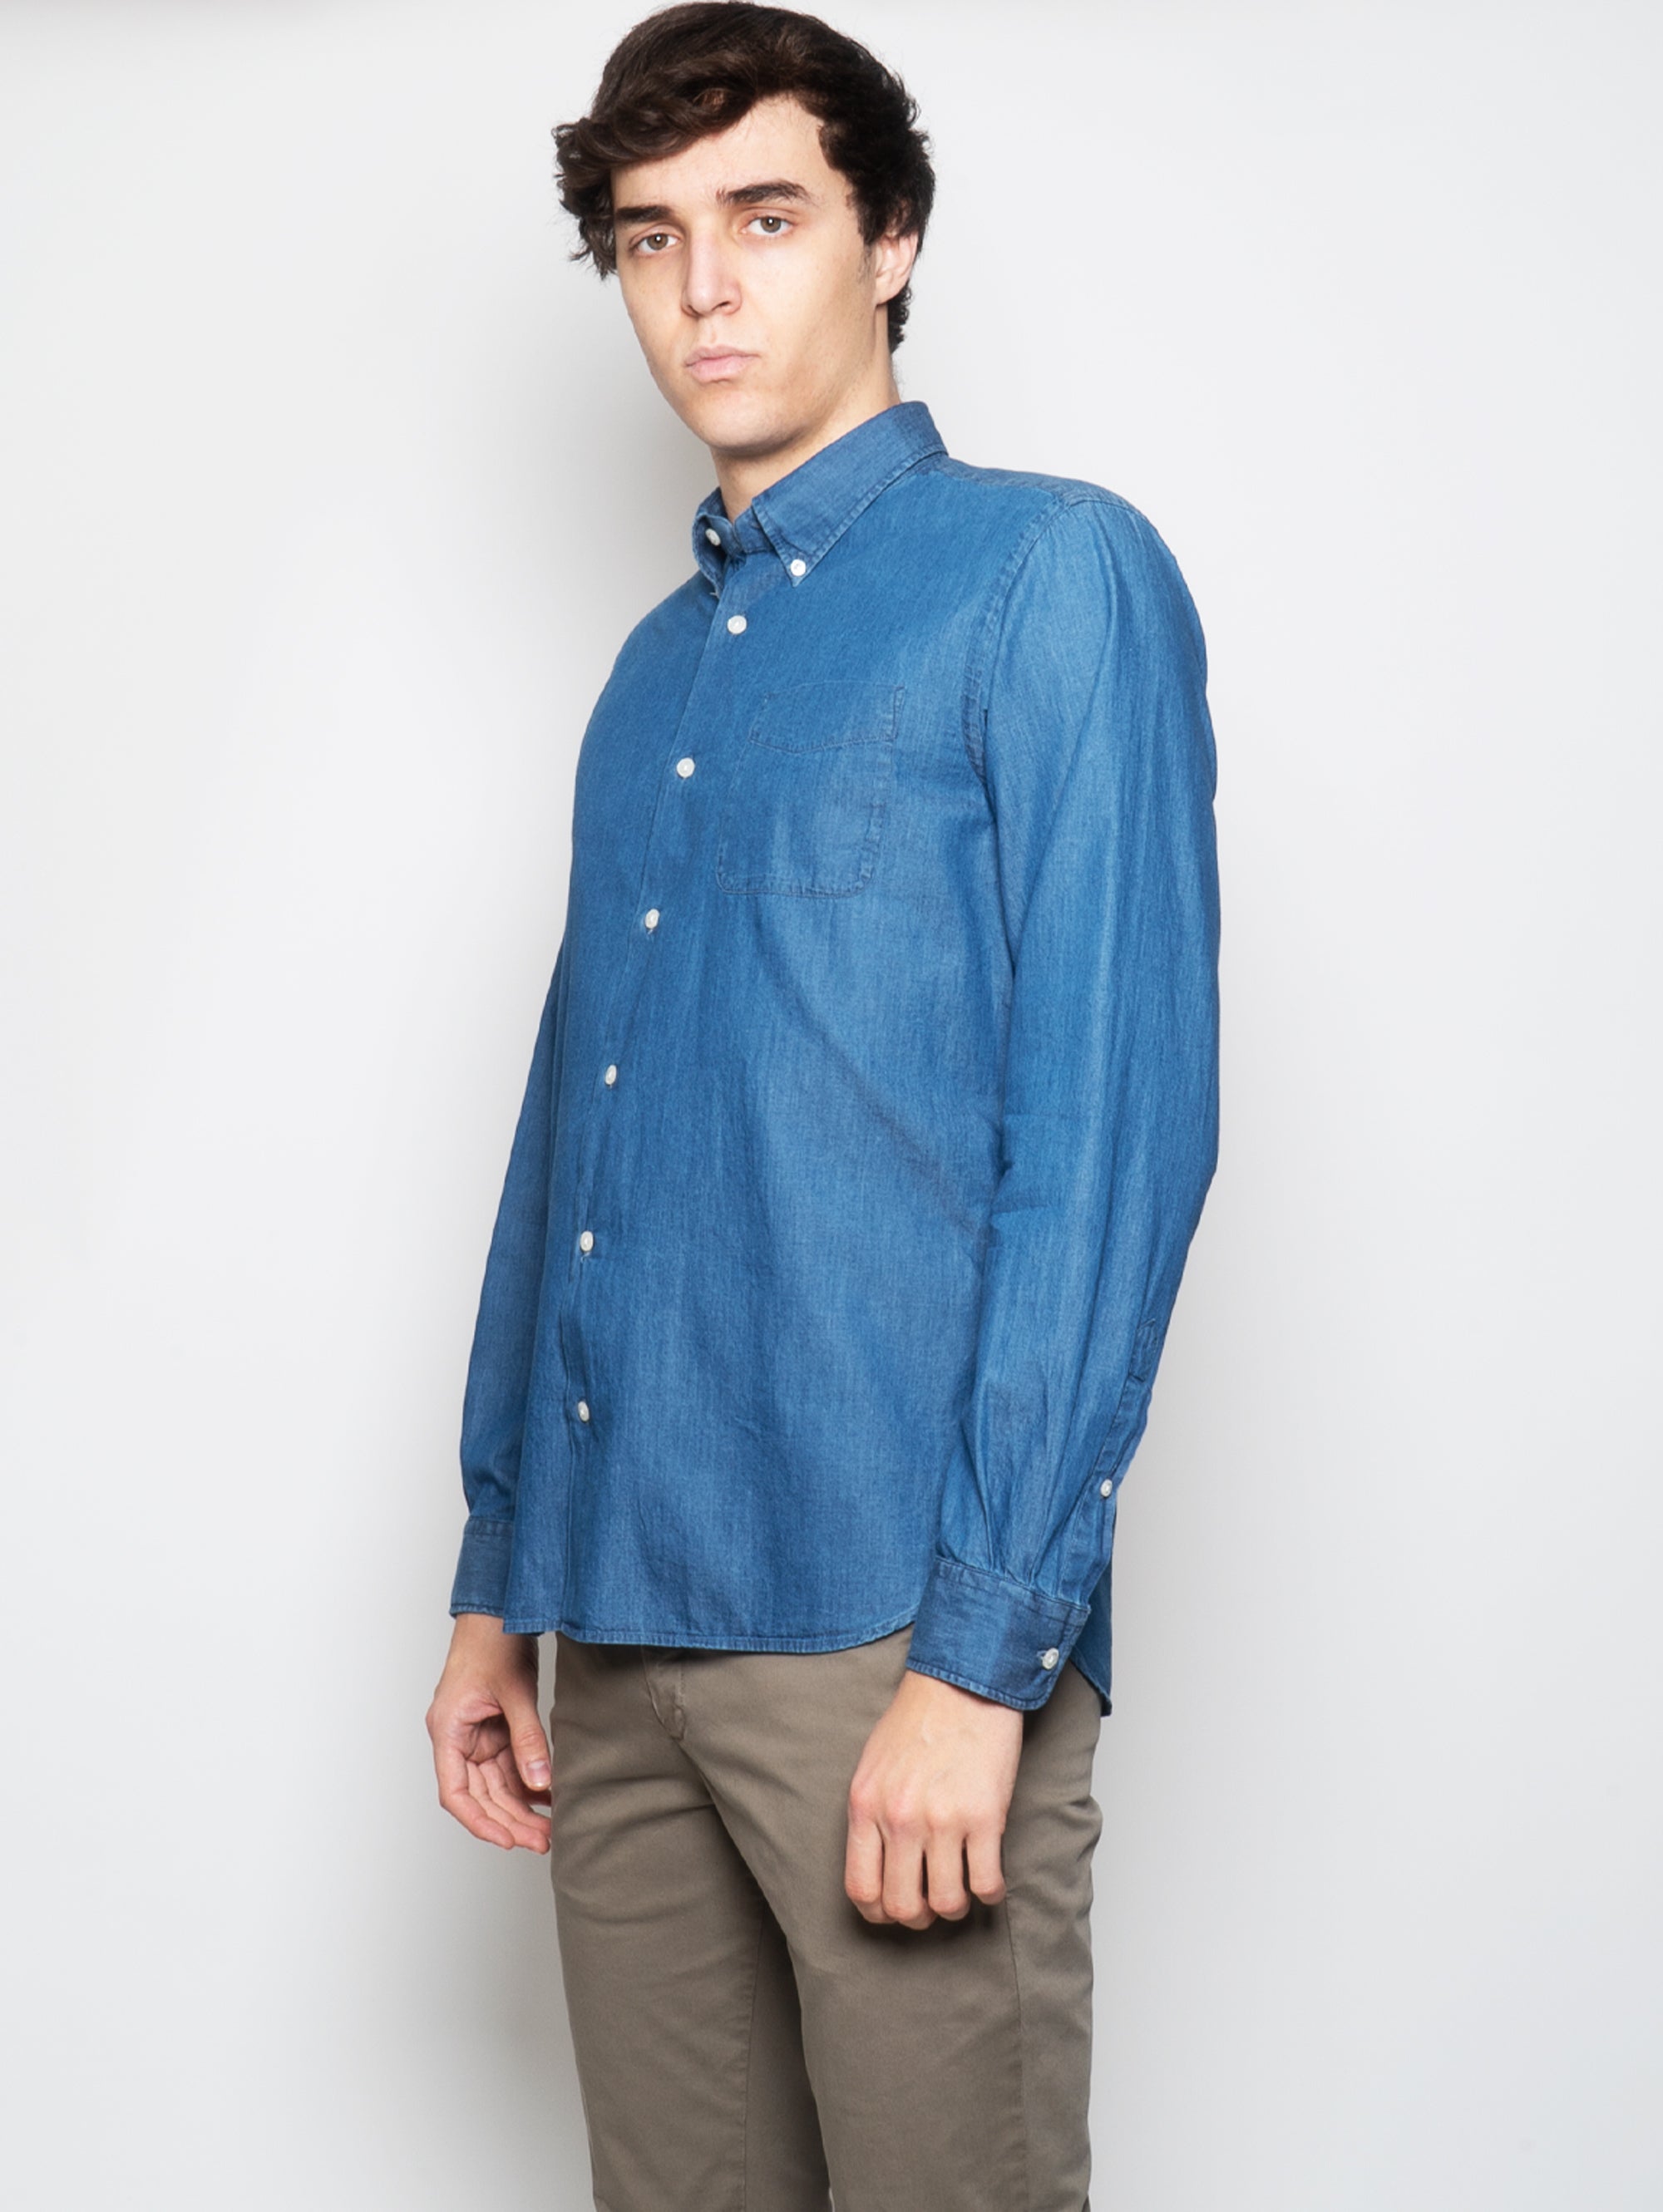 Chambray Shirt with Blue Pocket